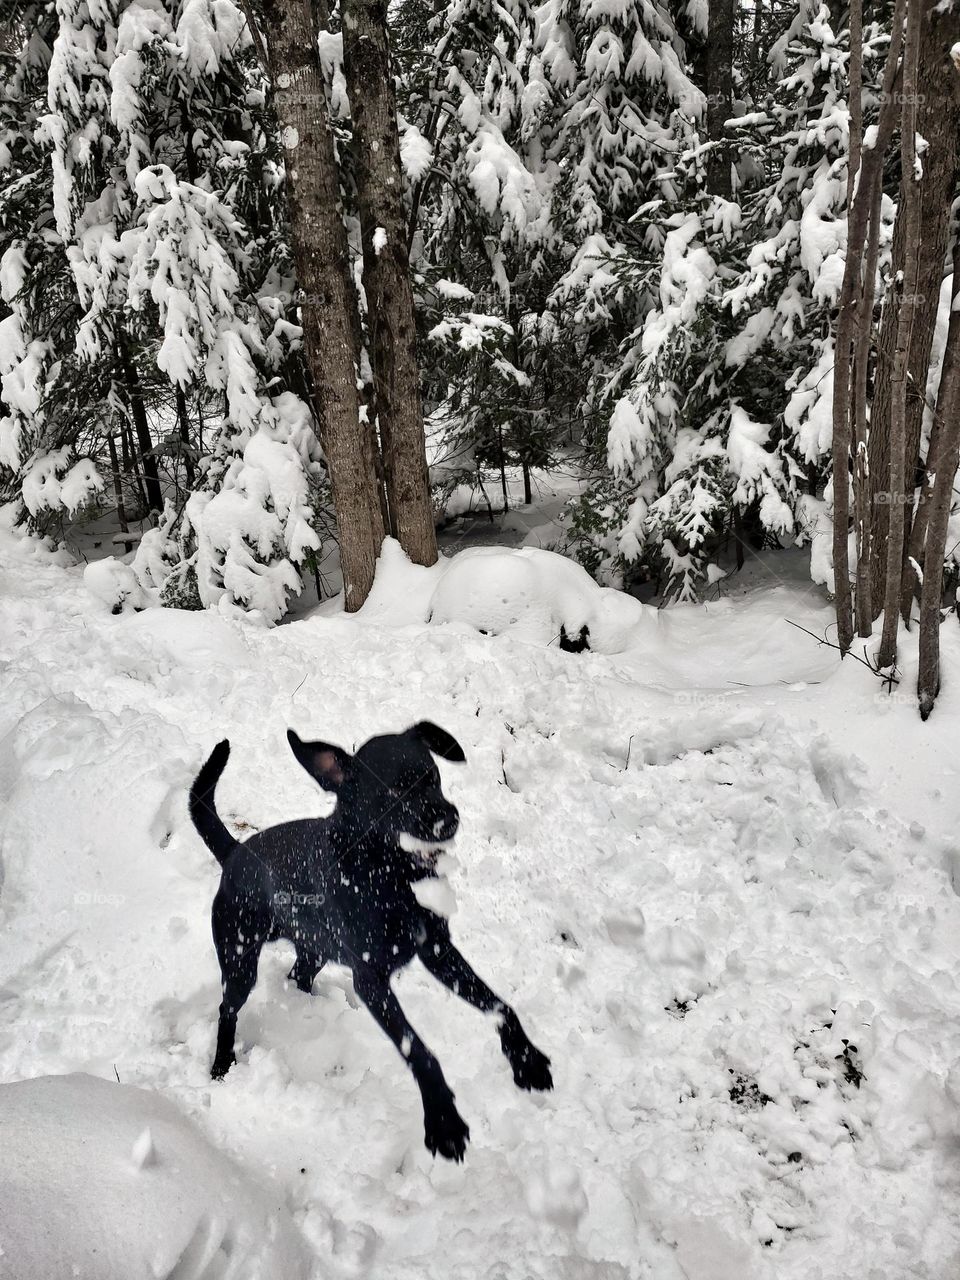 Dog catching snowballs.